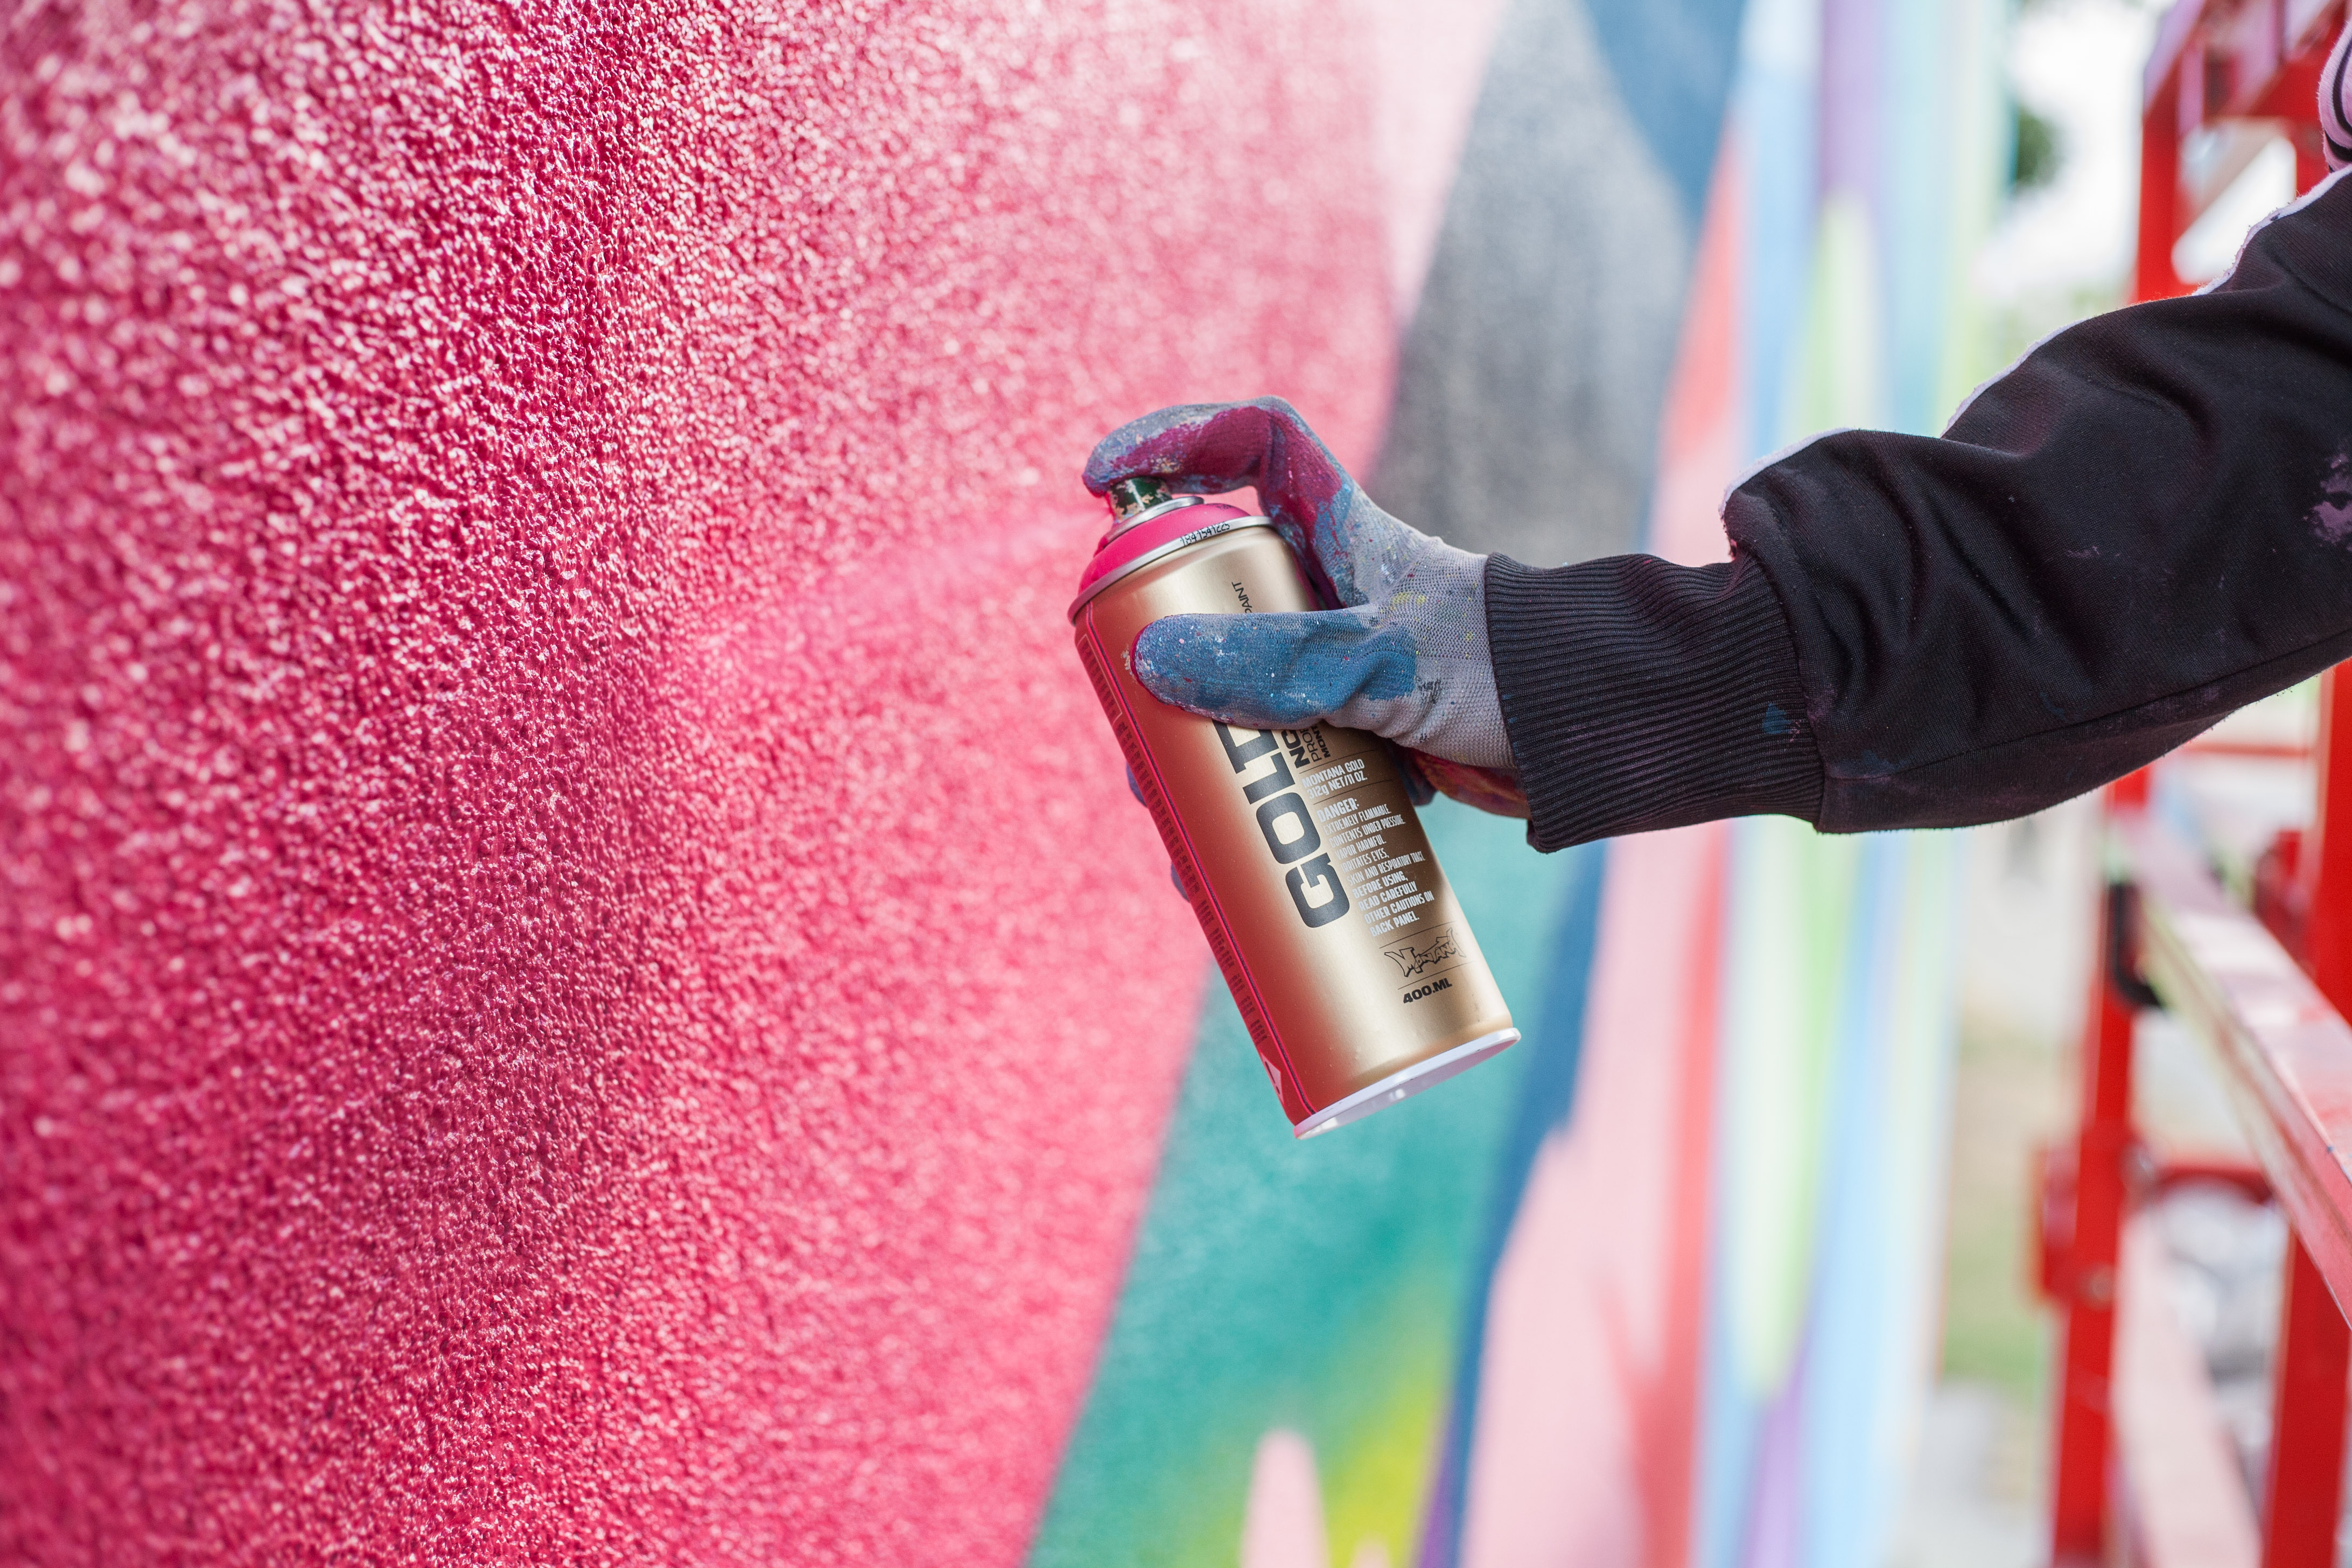 Montana Gold Acrylic Professional Spray Paint 400 ml - Pale Pink